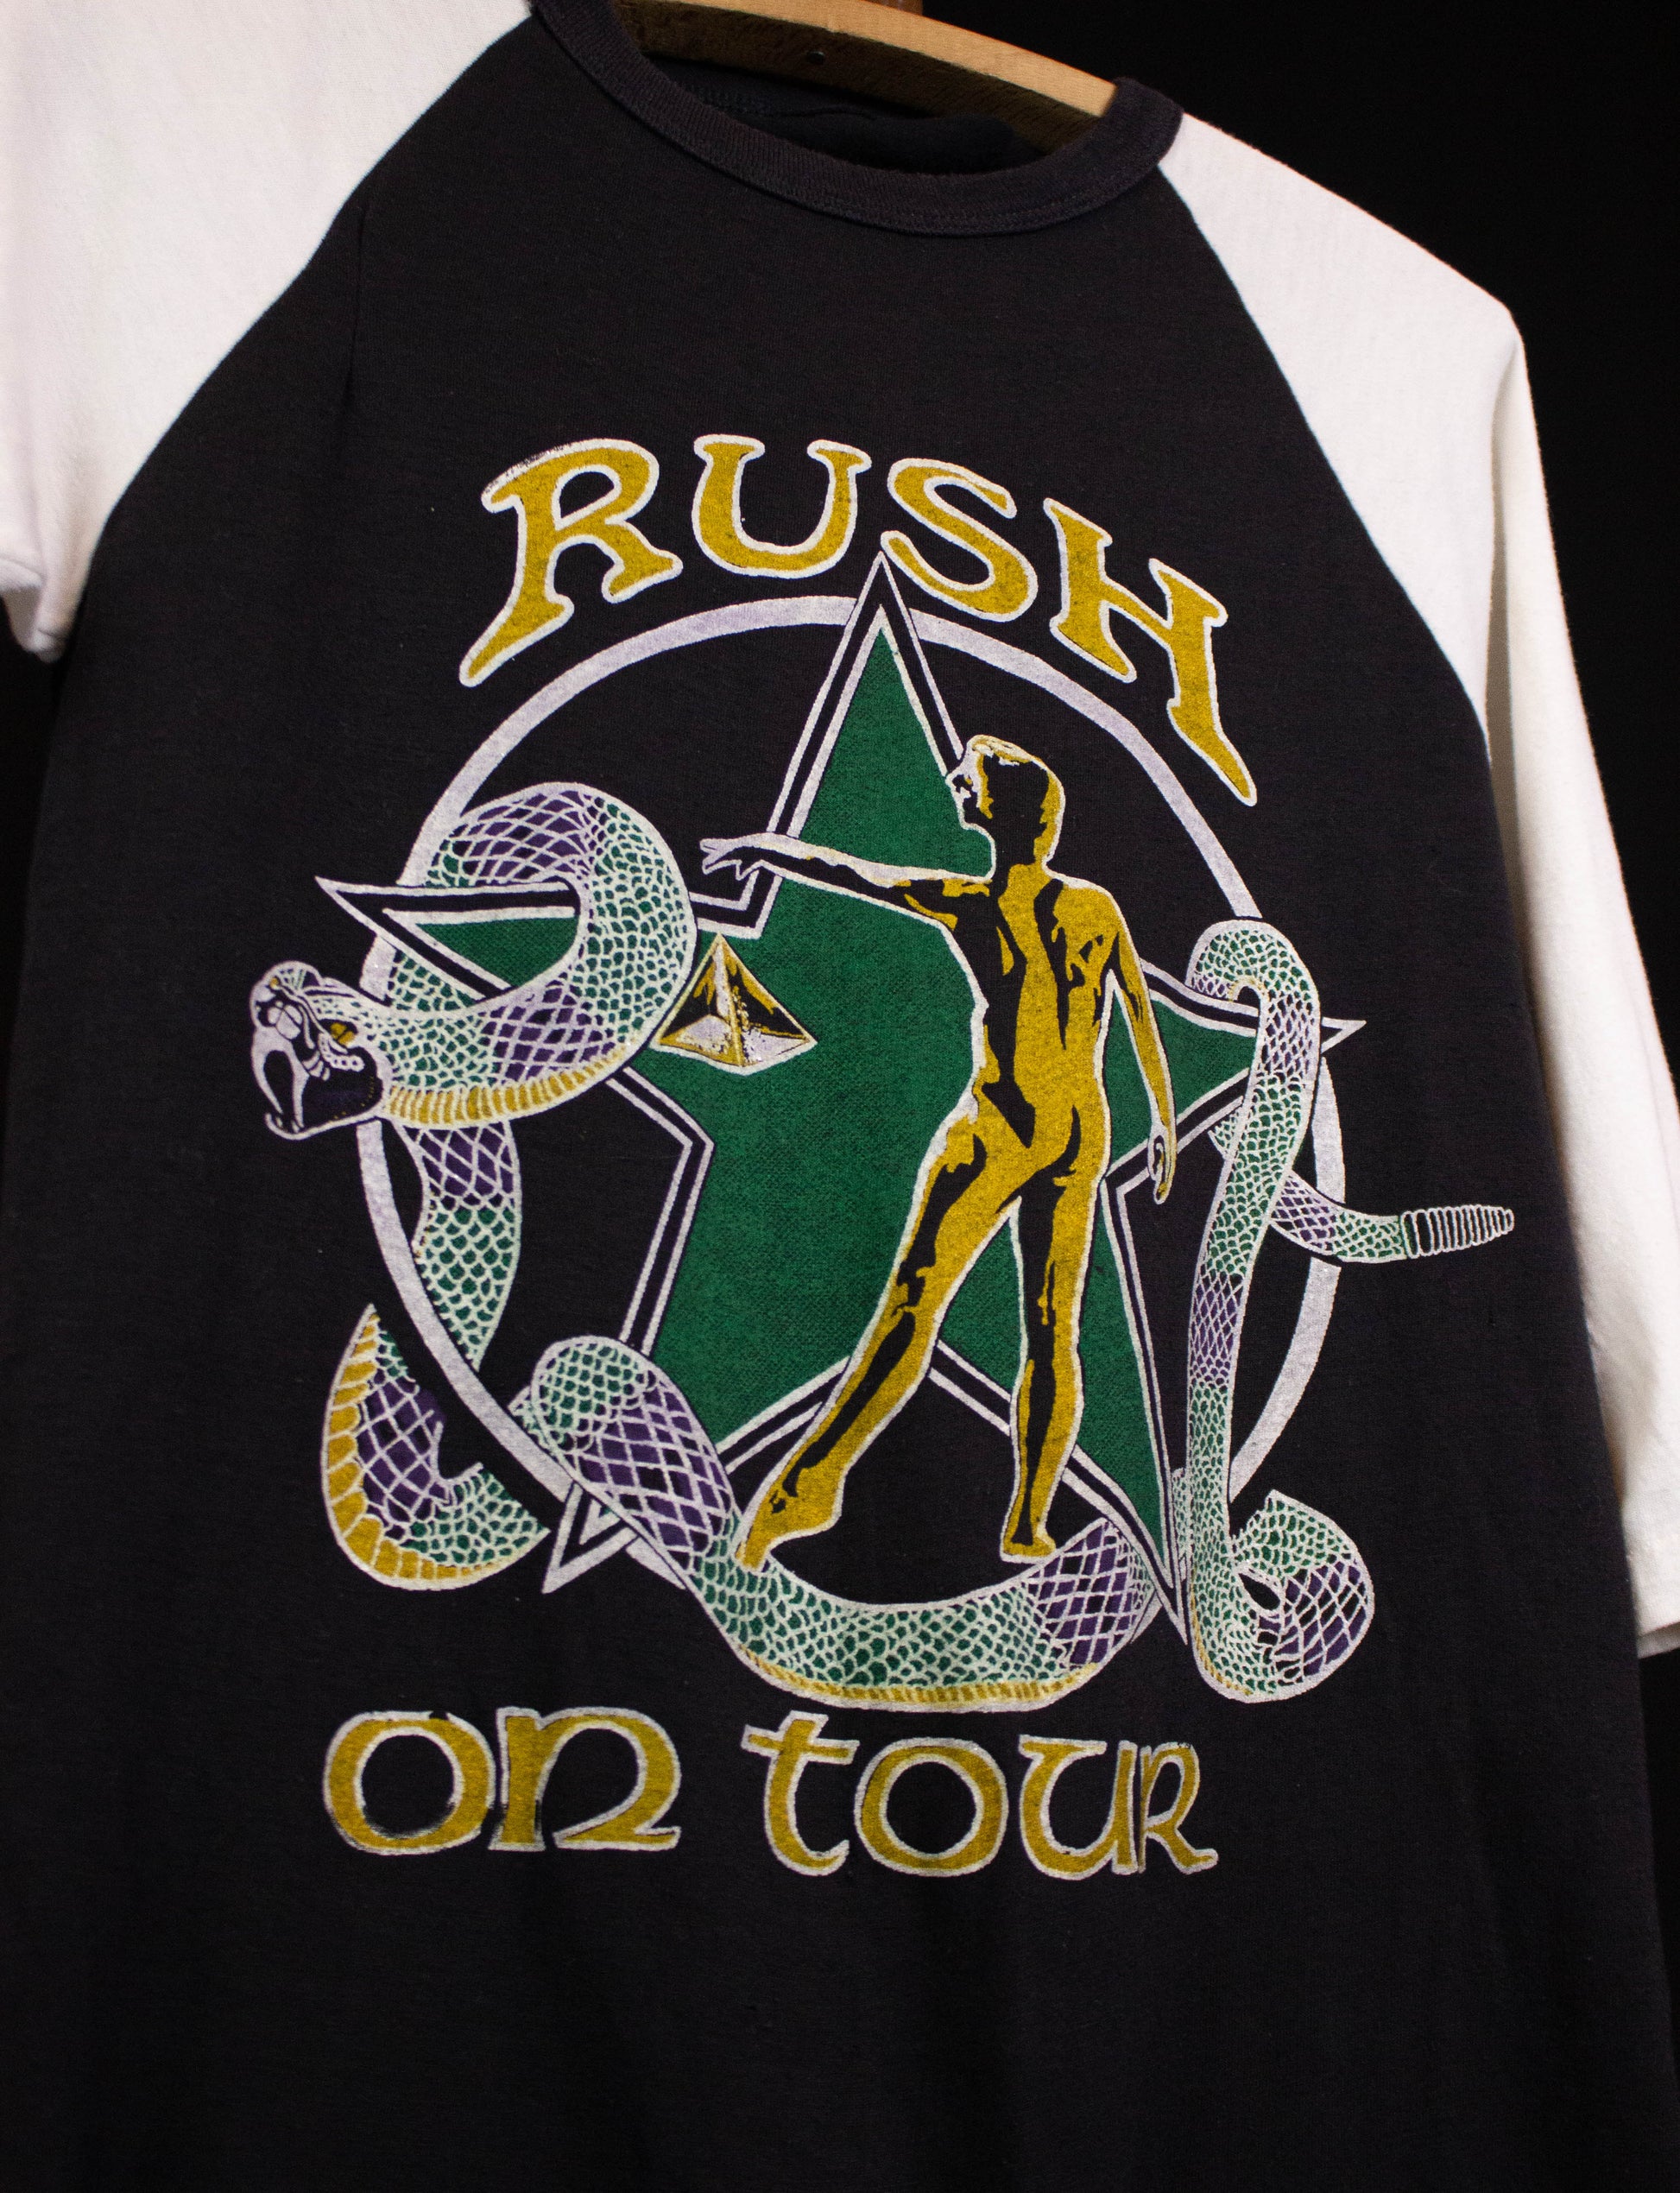 Vintage Rush On Tour 1981 Raglan Concert T Shirt Black and White Small